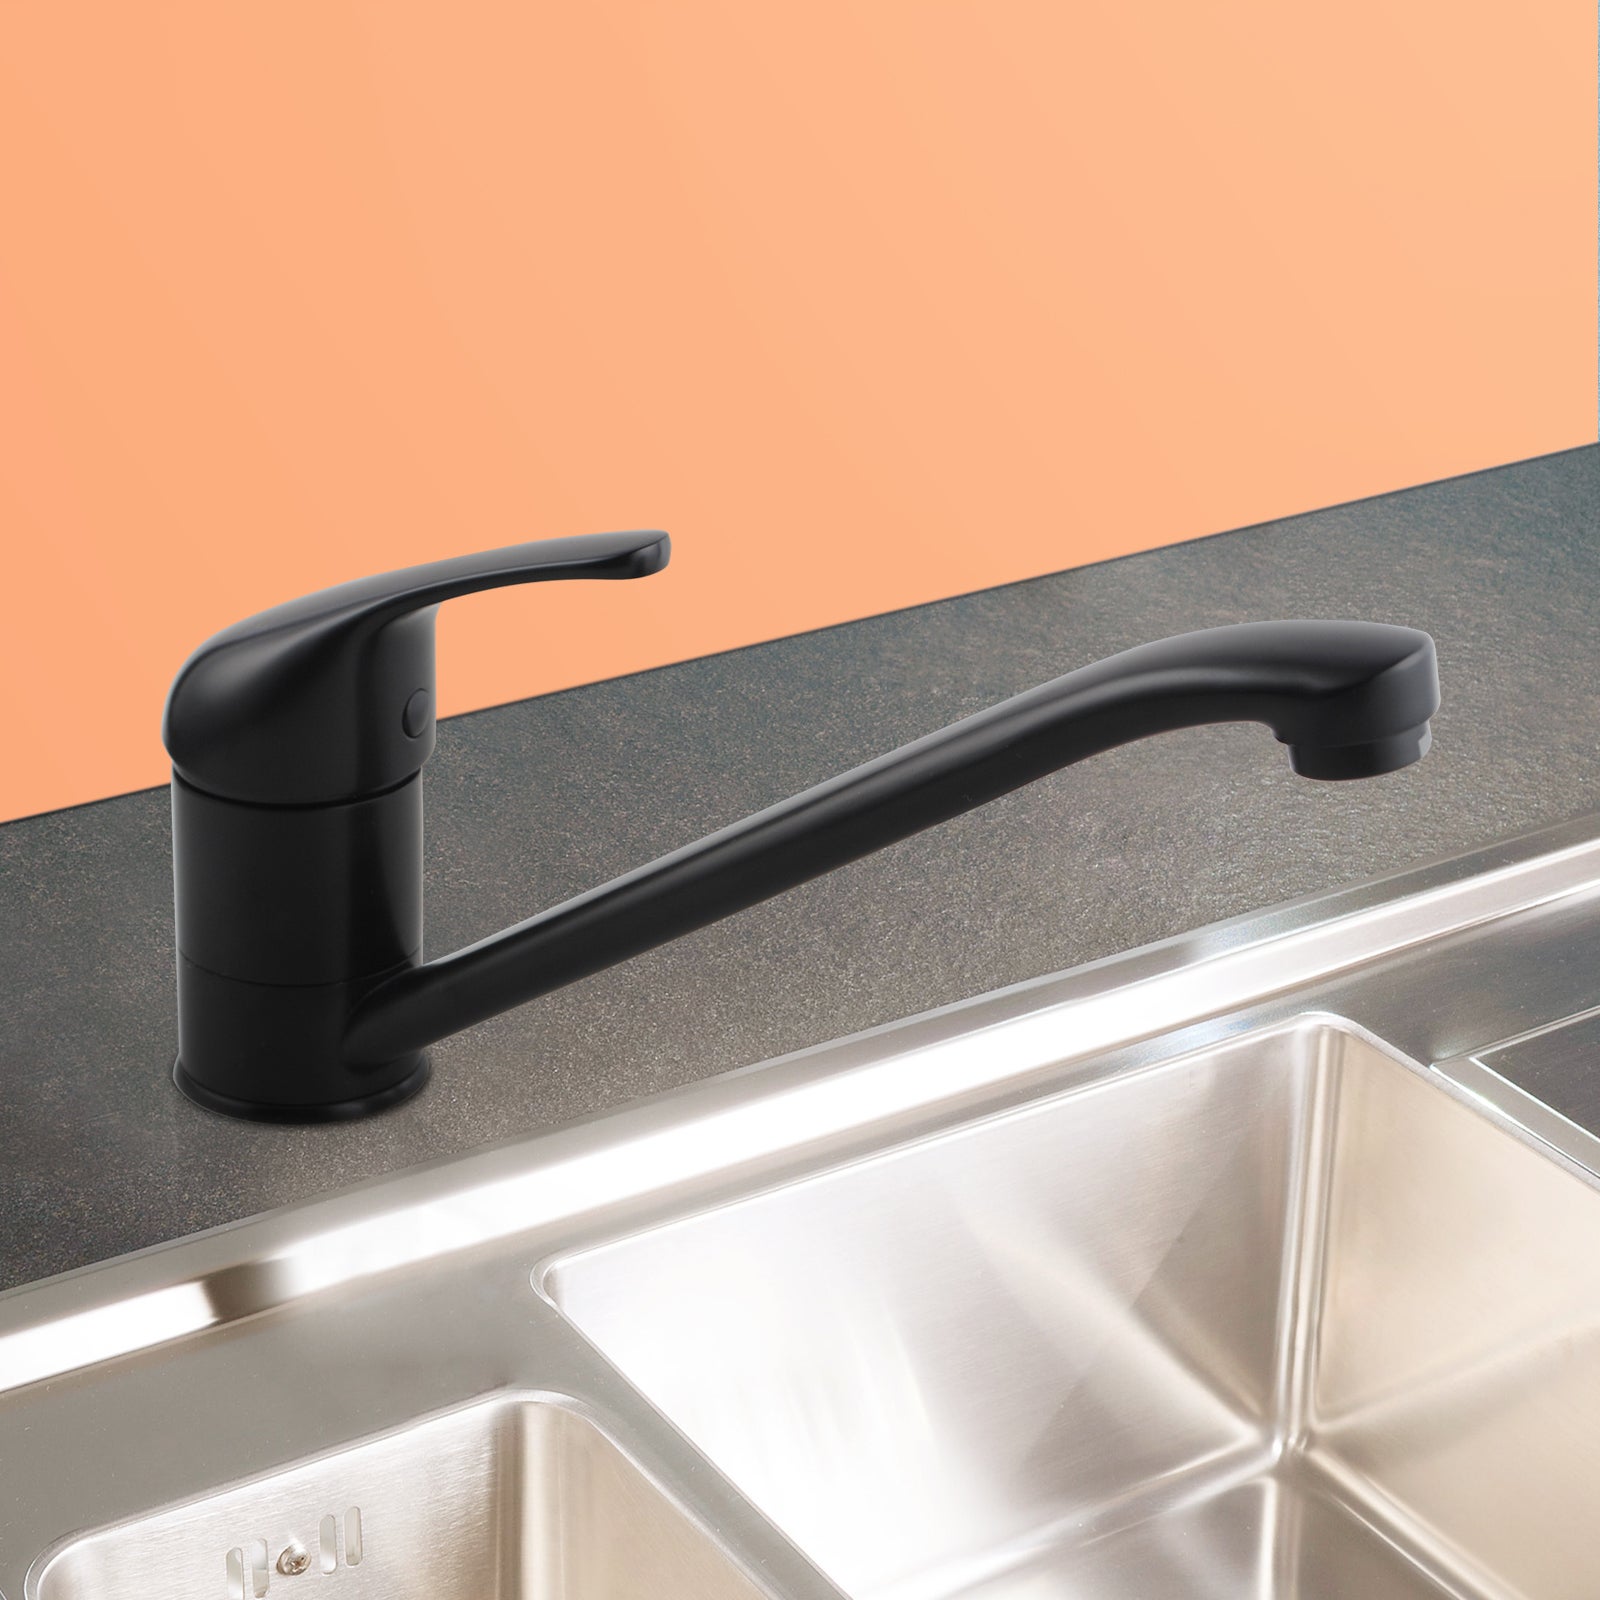 ACA Black Brass Swivel Kitchen Tap Sink Mixer Tap Faucet Lead Free Watermark WELS